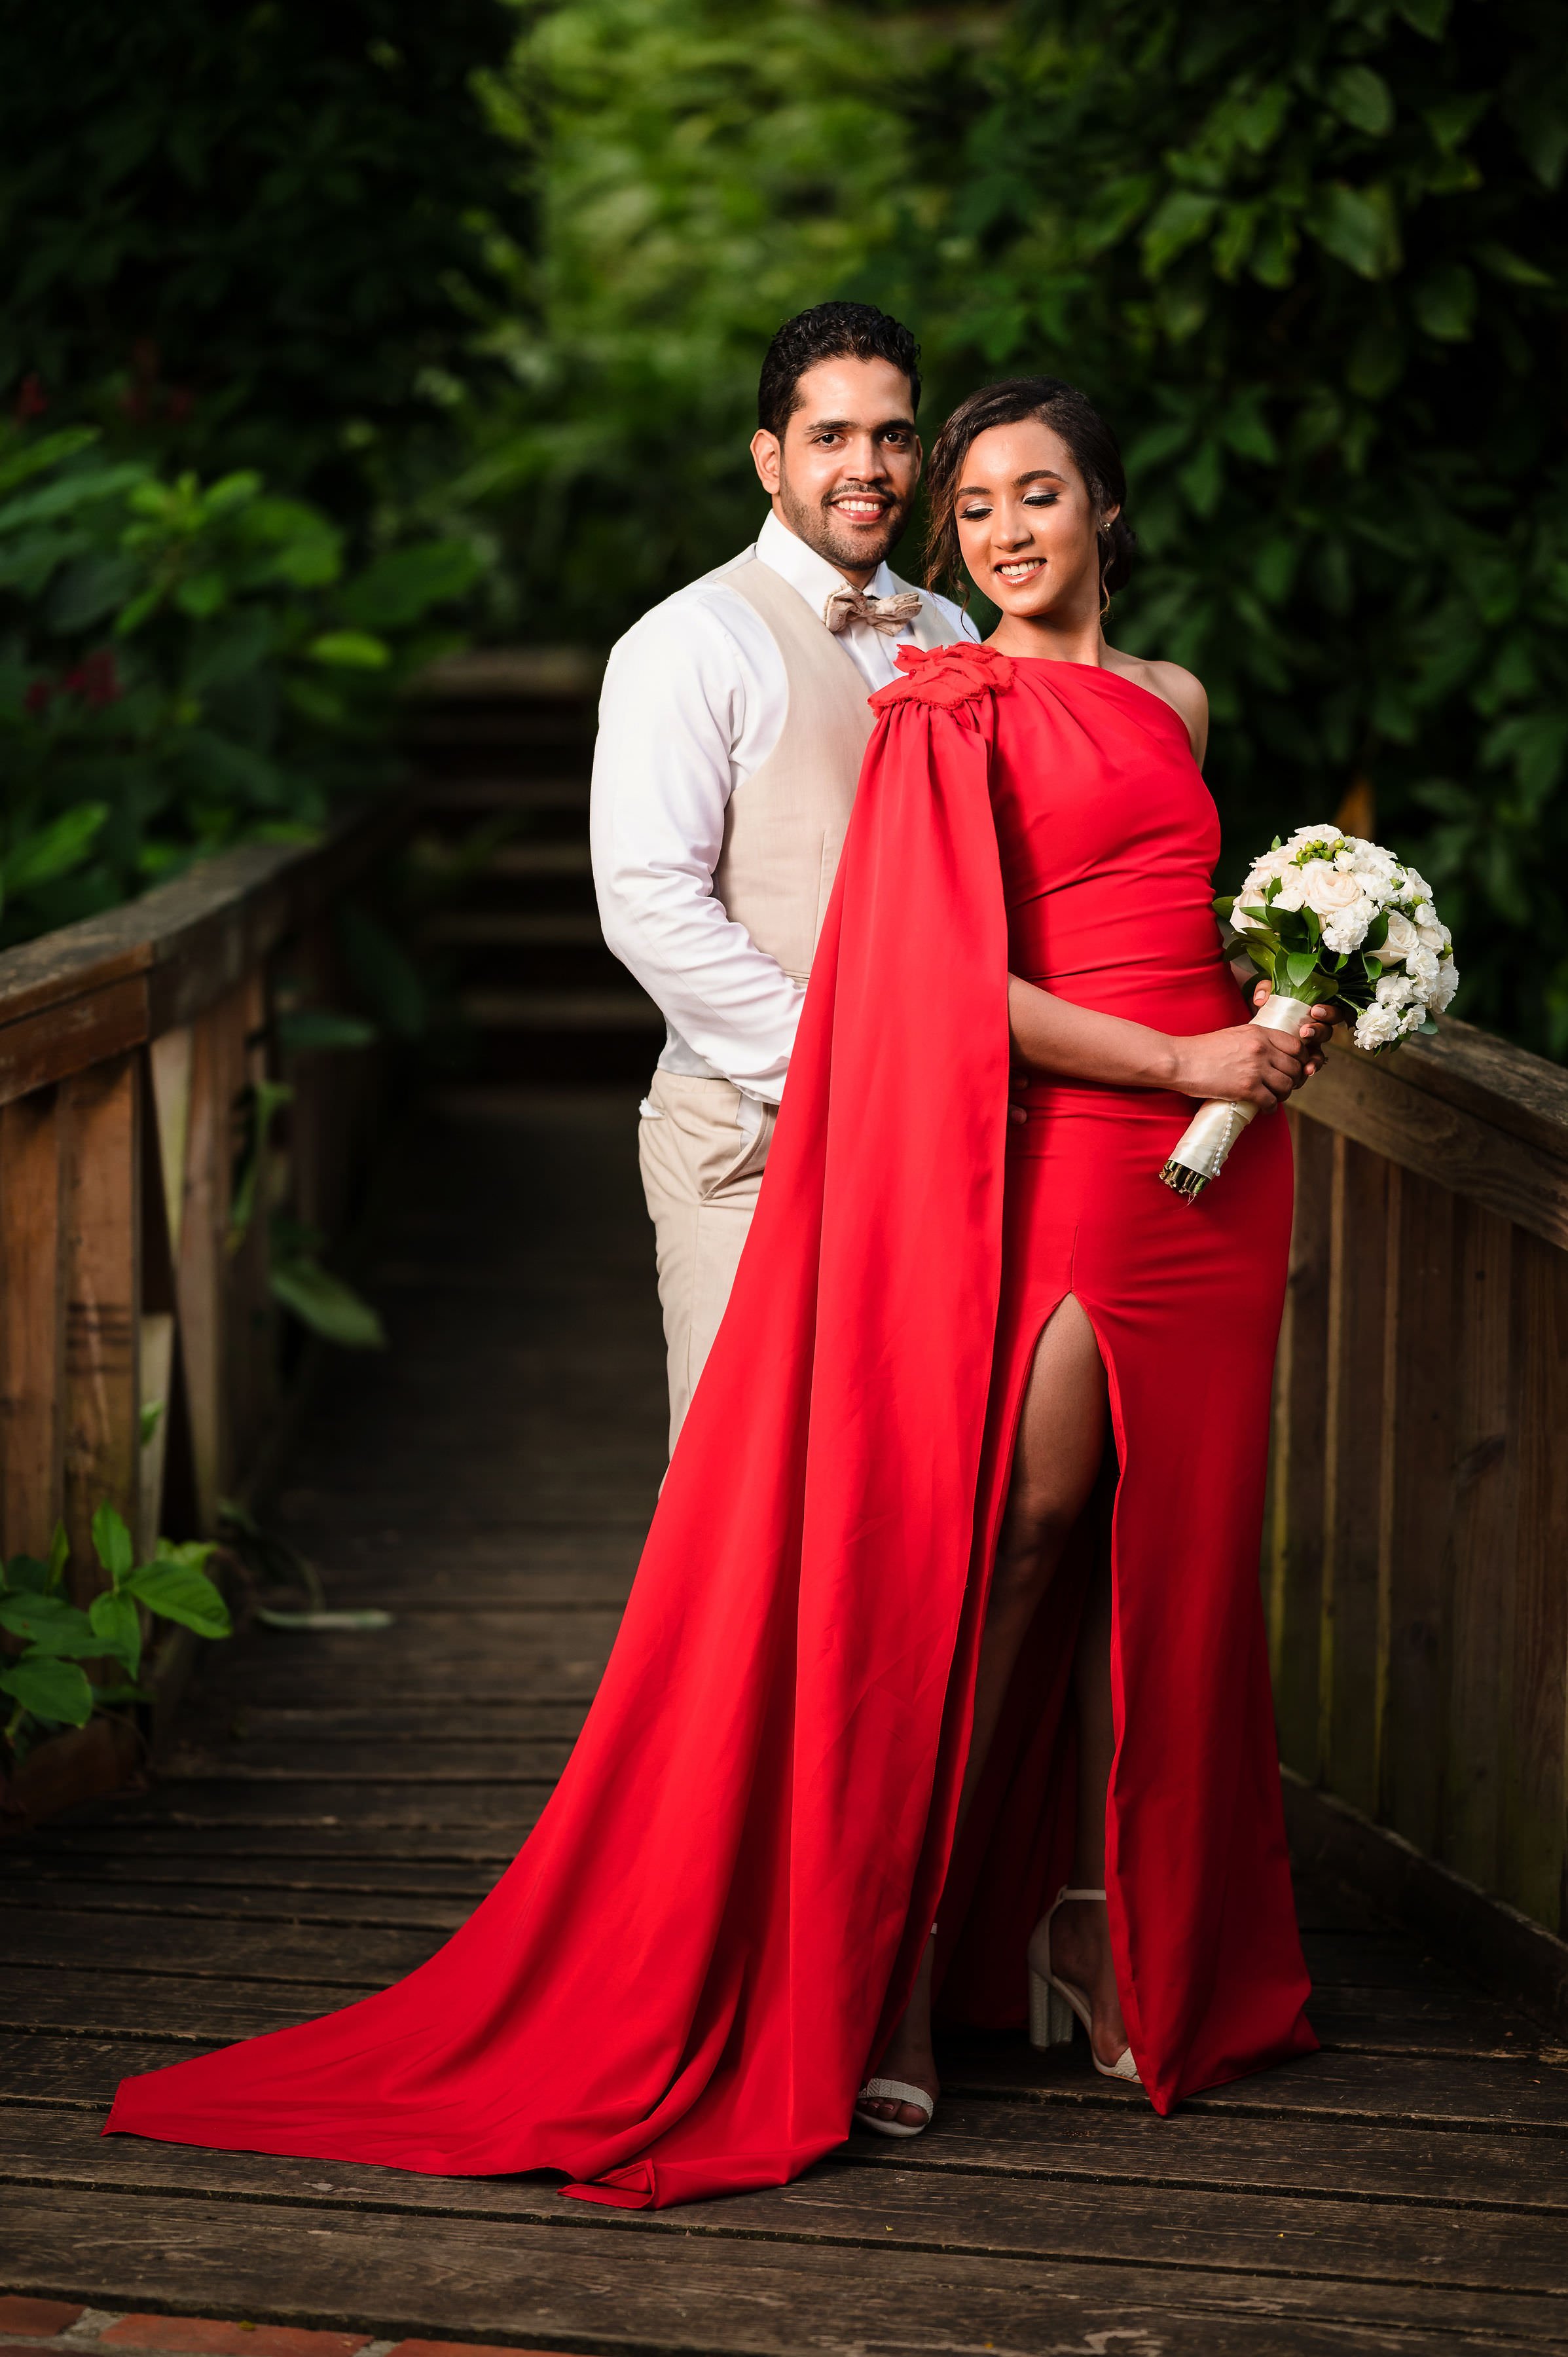 Jardin_Botanico_Wedding_photoshoot_couple_red_dress_sesion_preboda_Cristina_Angel_5684.JPG